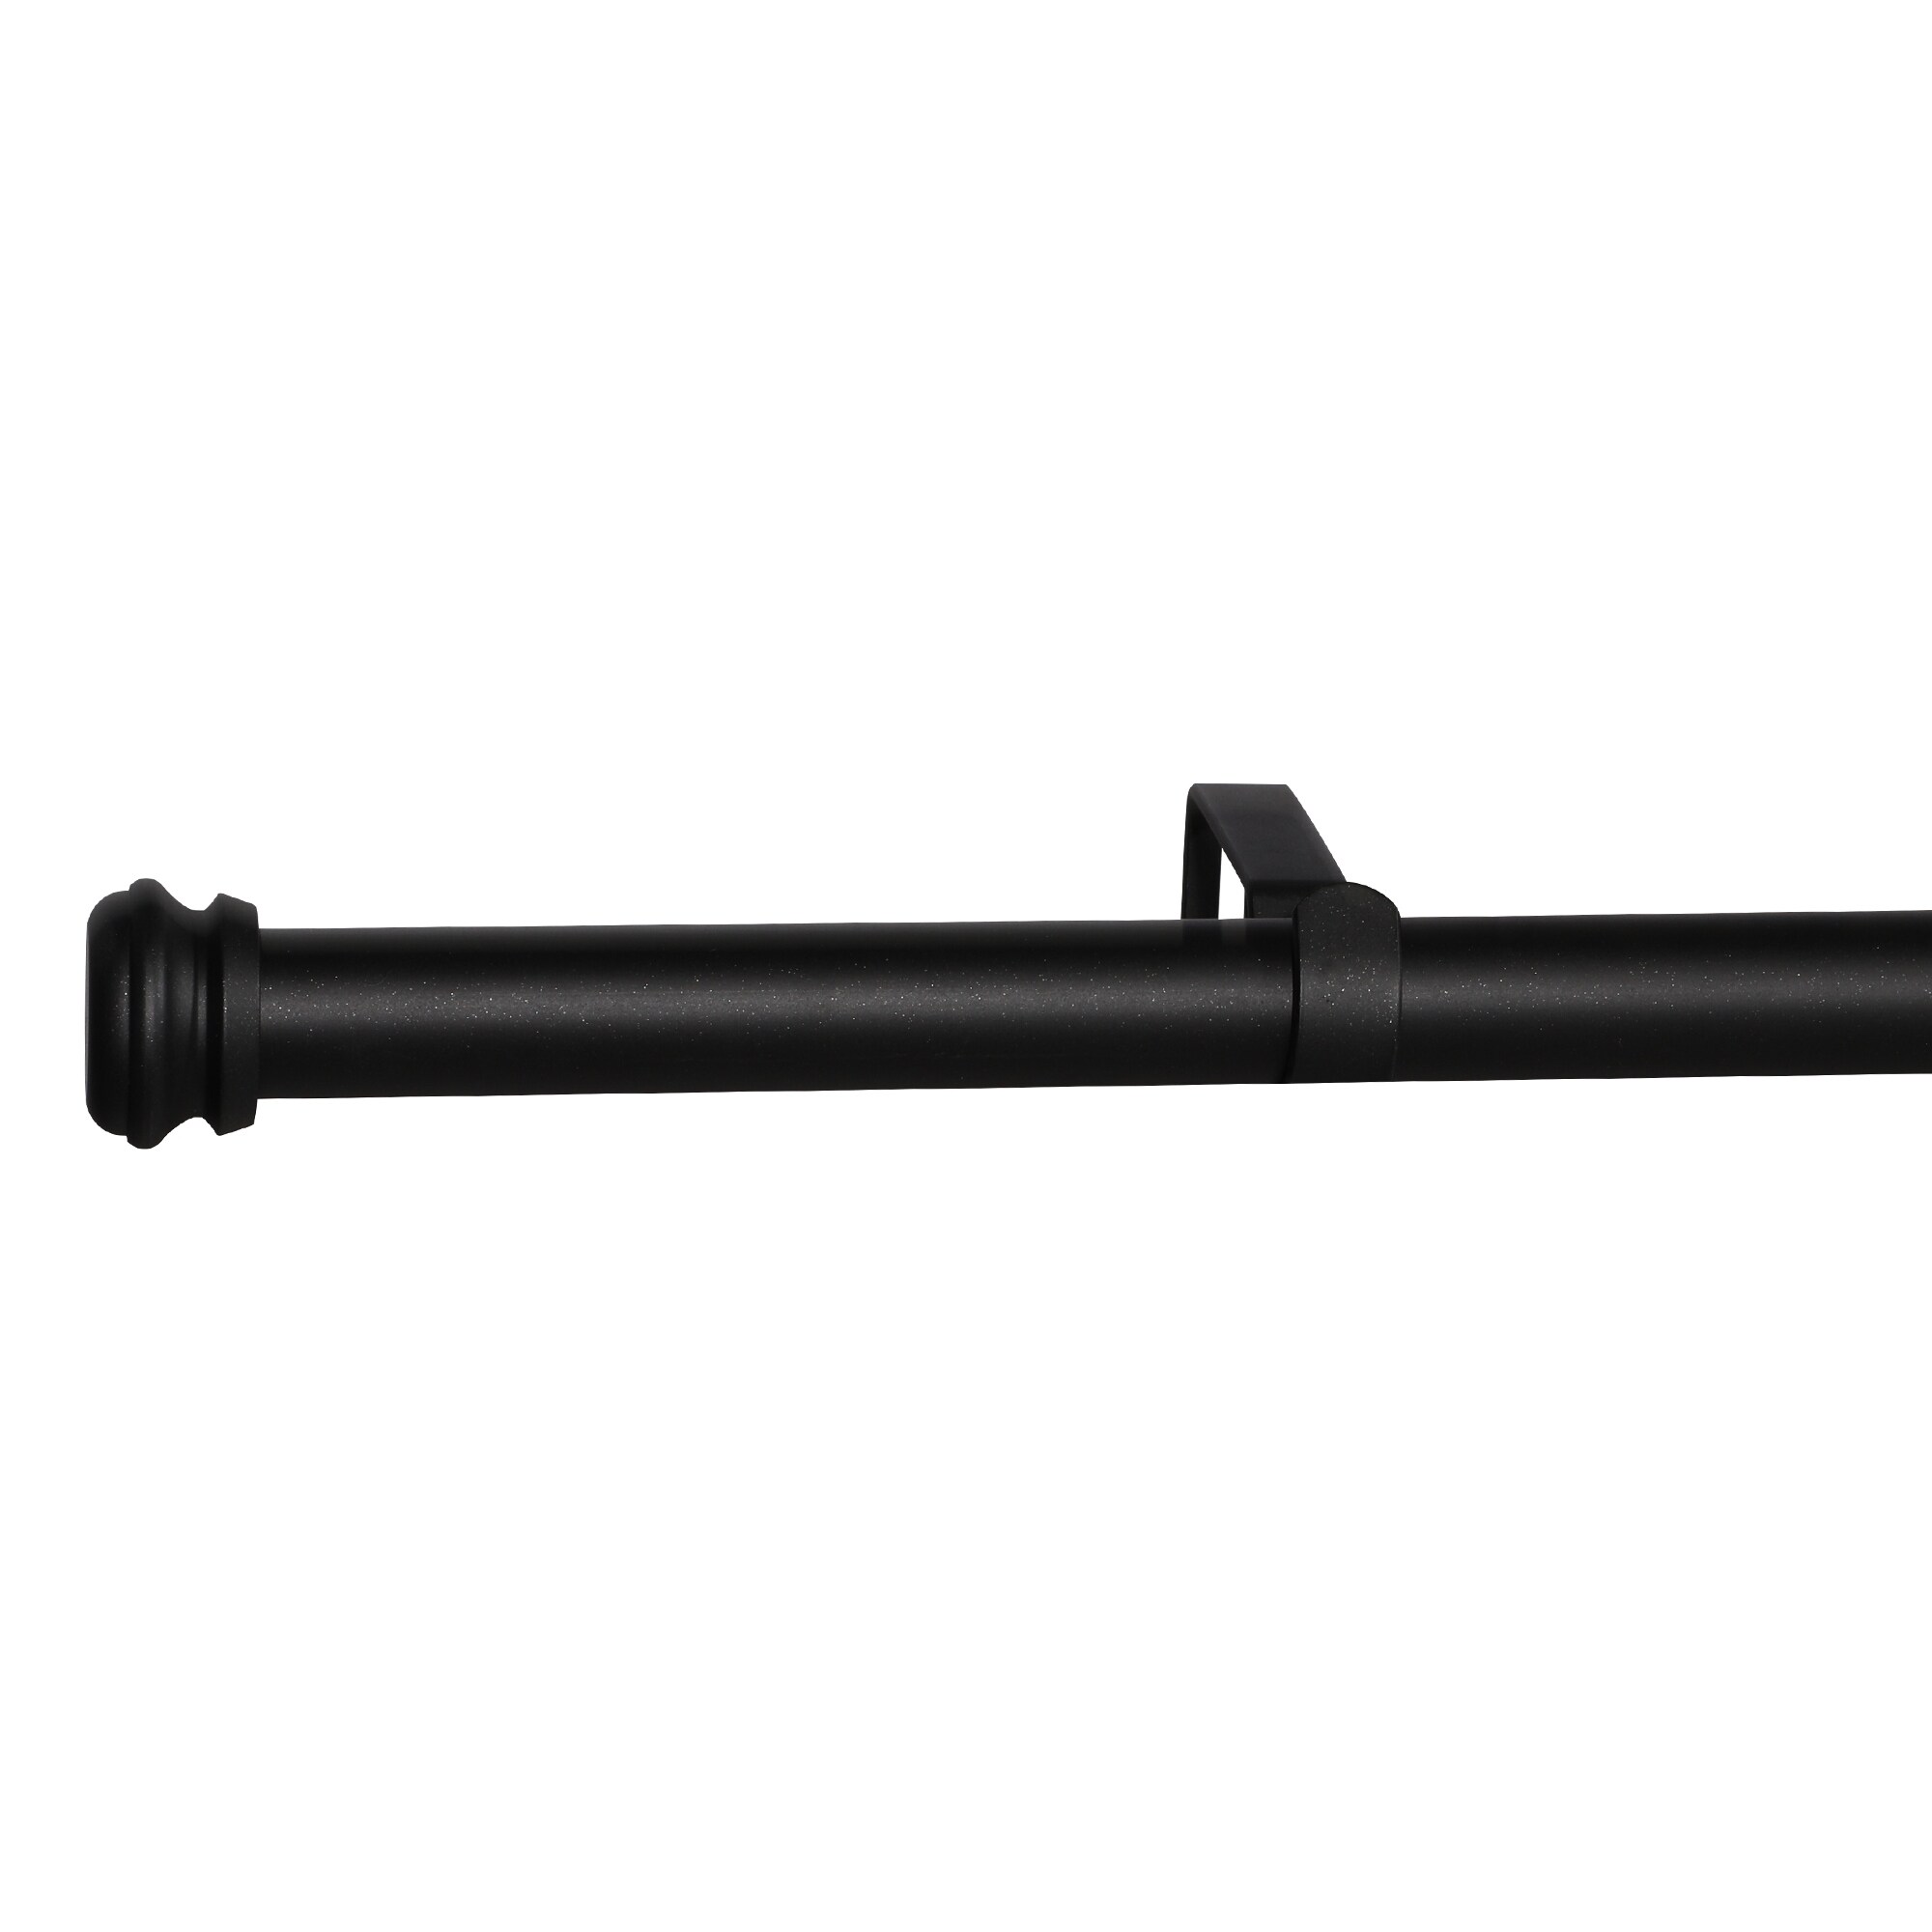 Black Adjustable Telescoping Rod with Basics End Cap Finials